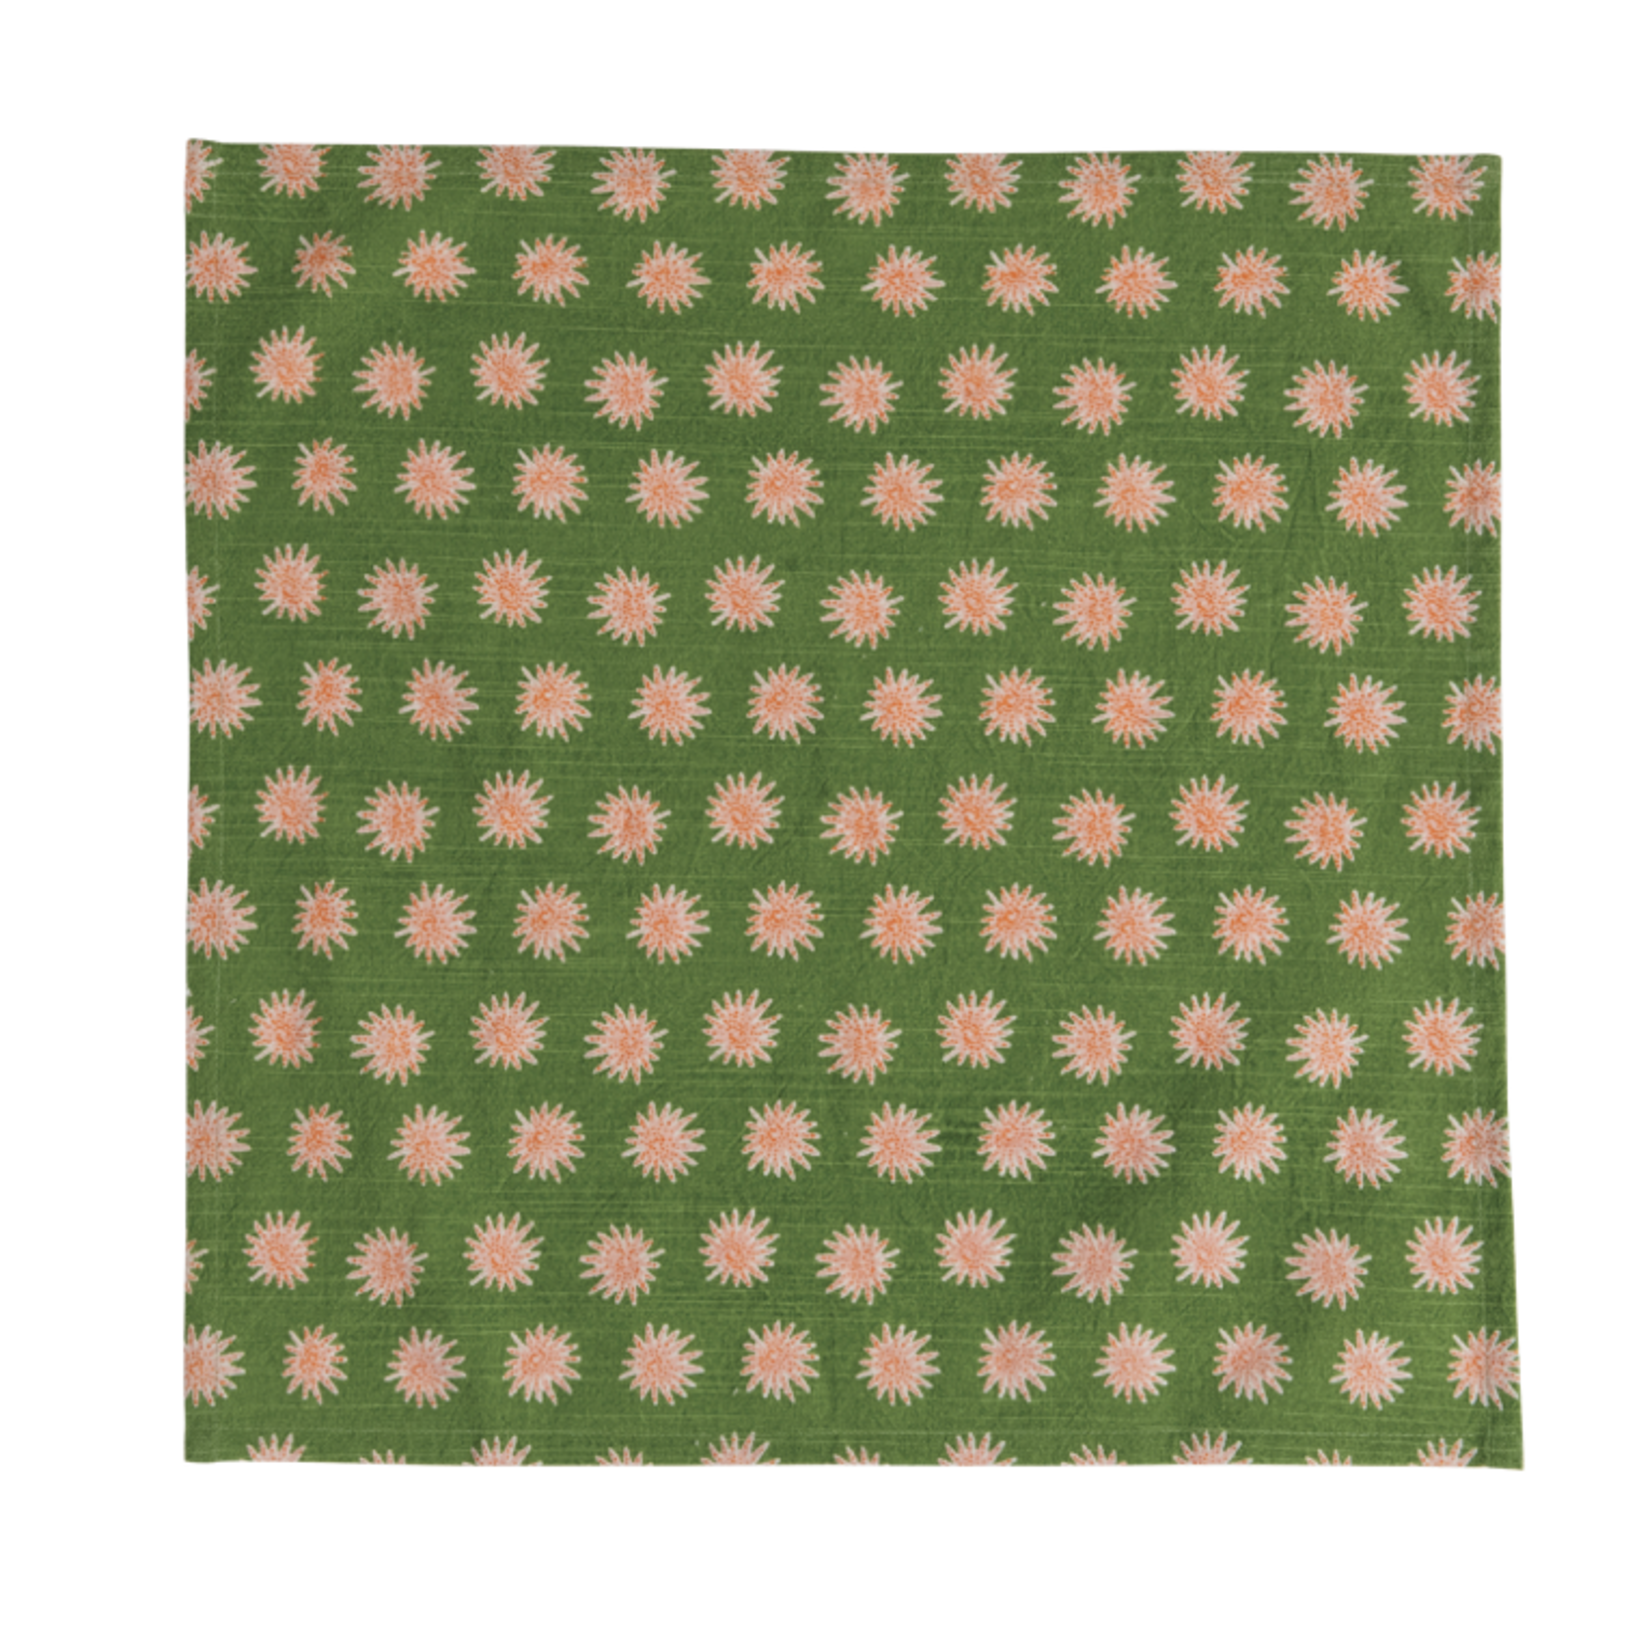 Cotton Slub Napkins with Green, White and Pink Pattern